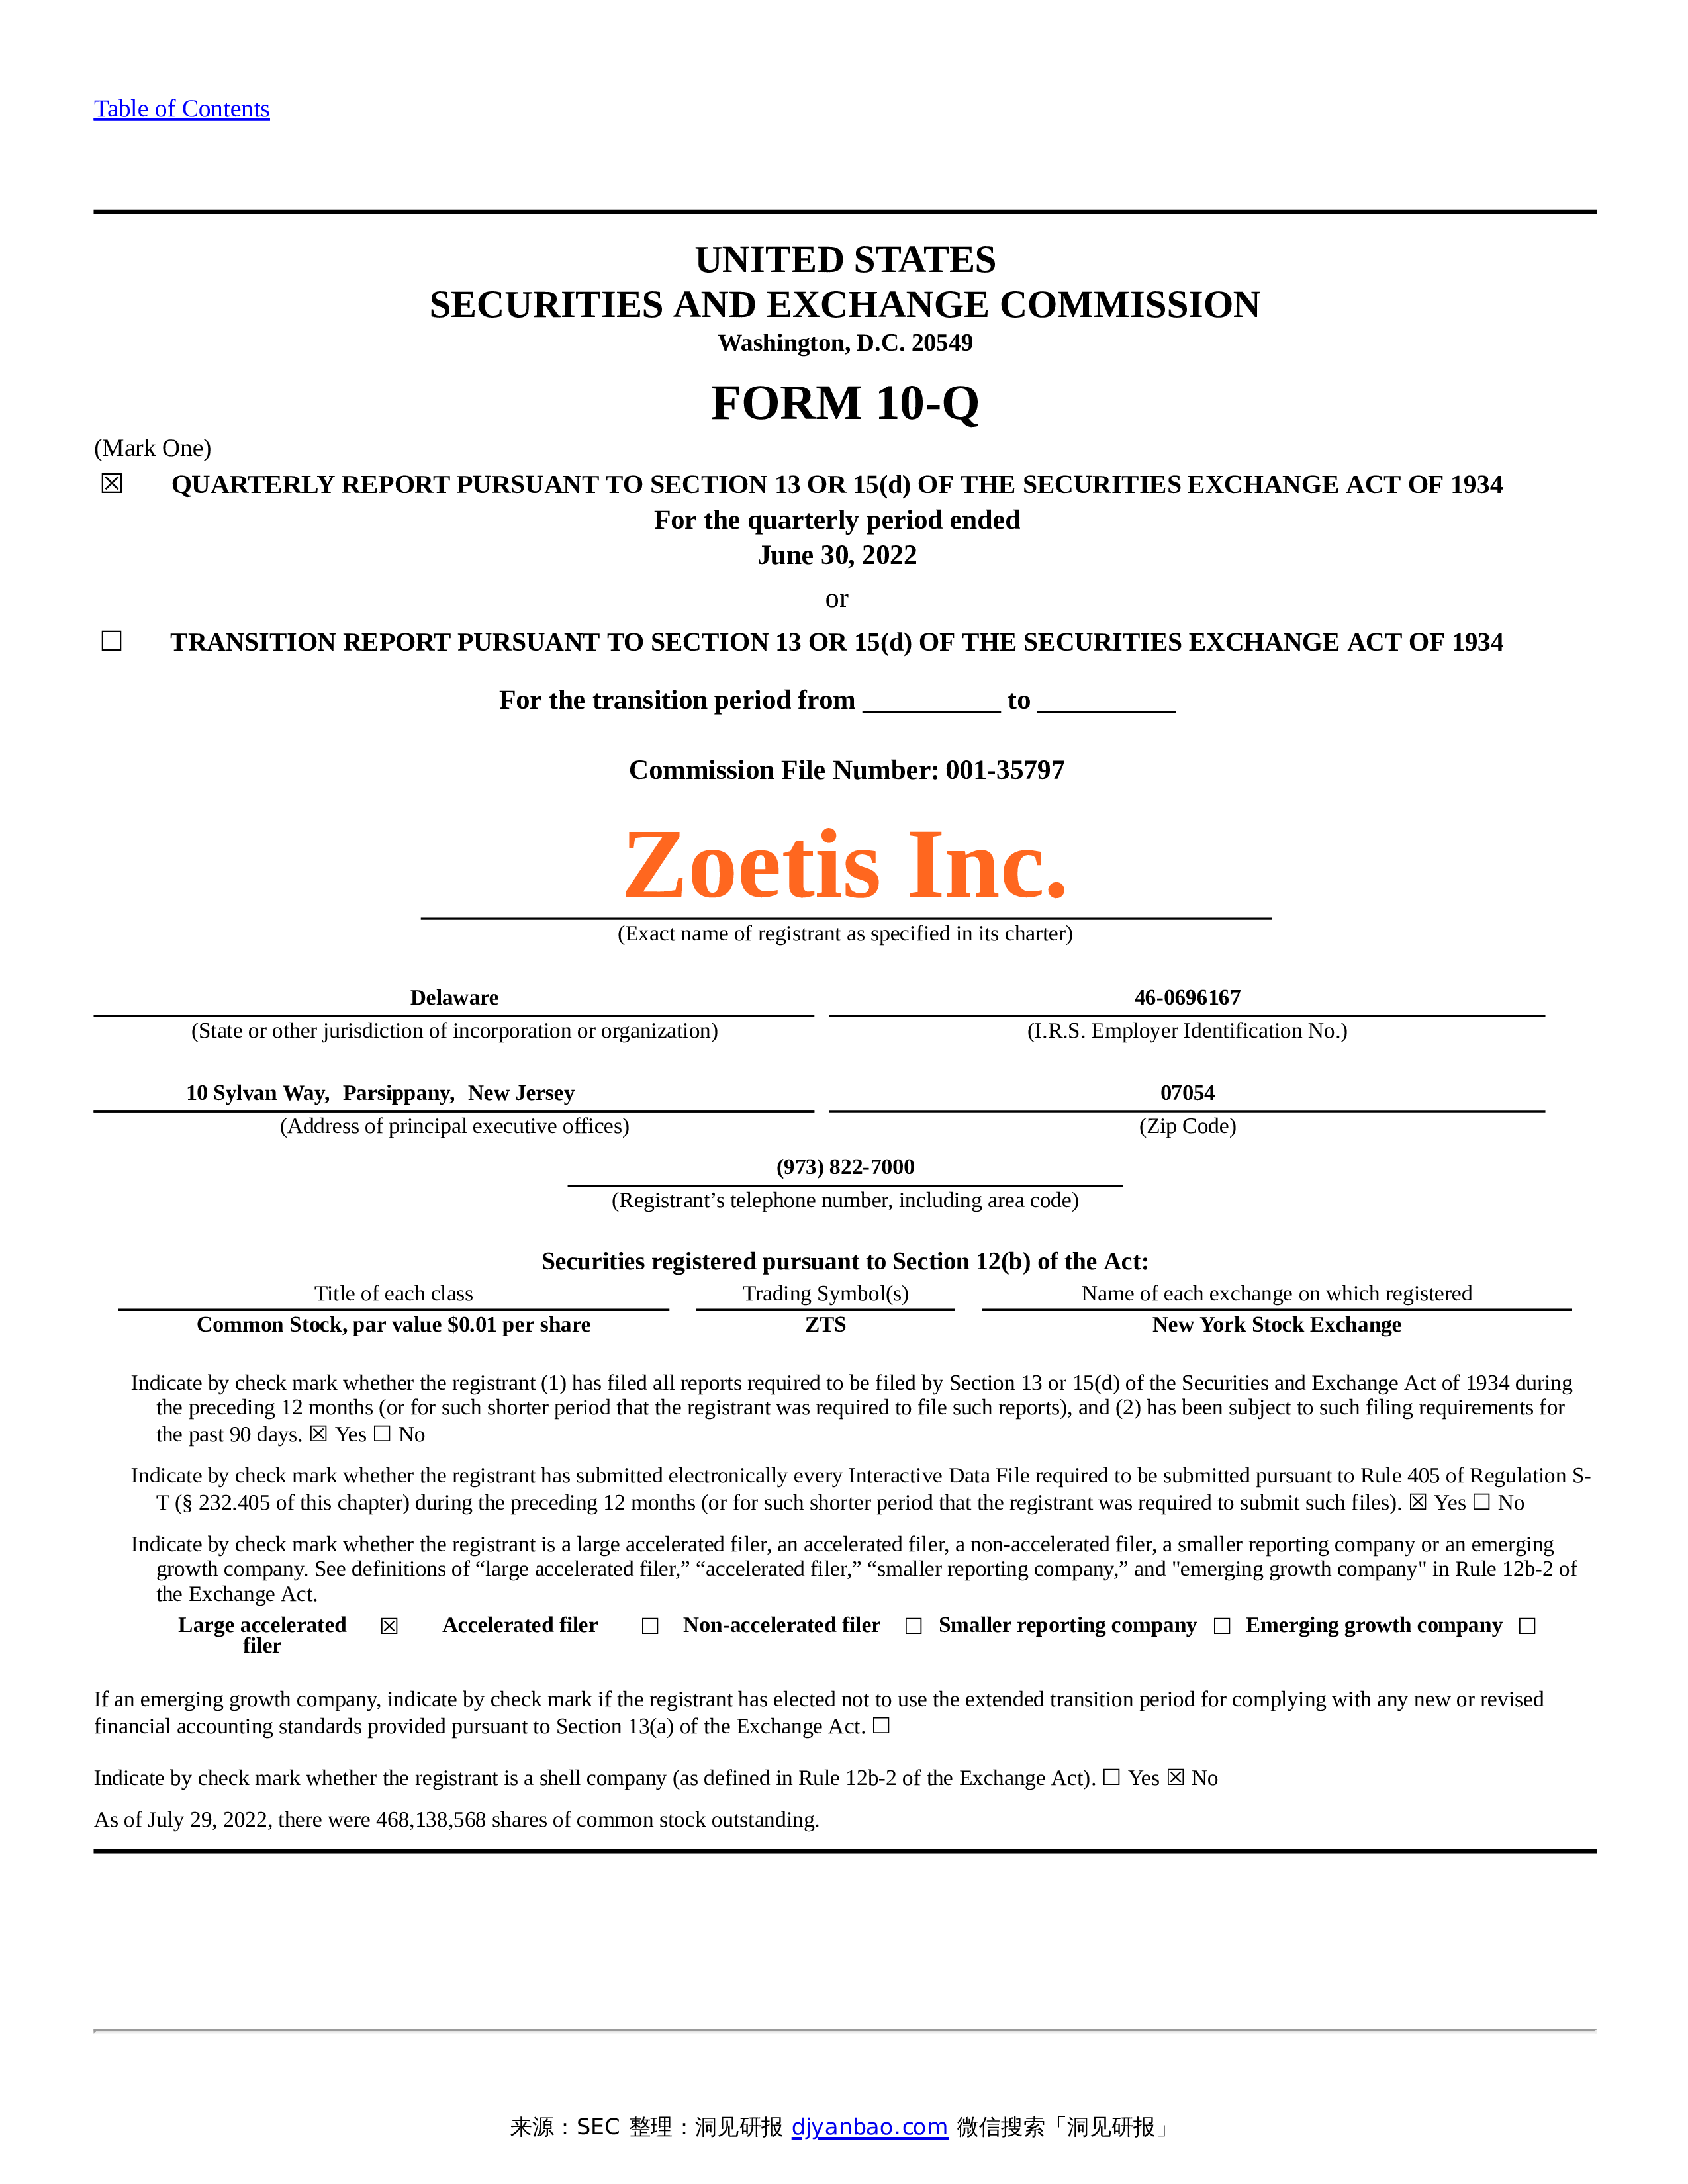 form-10-q-zoetis-inc